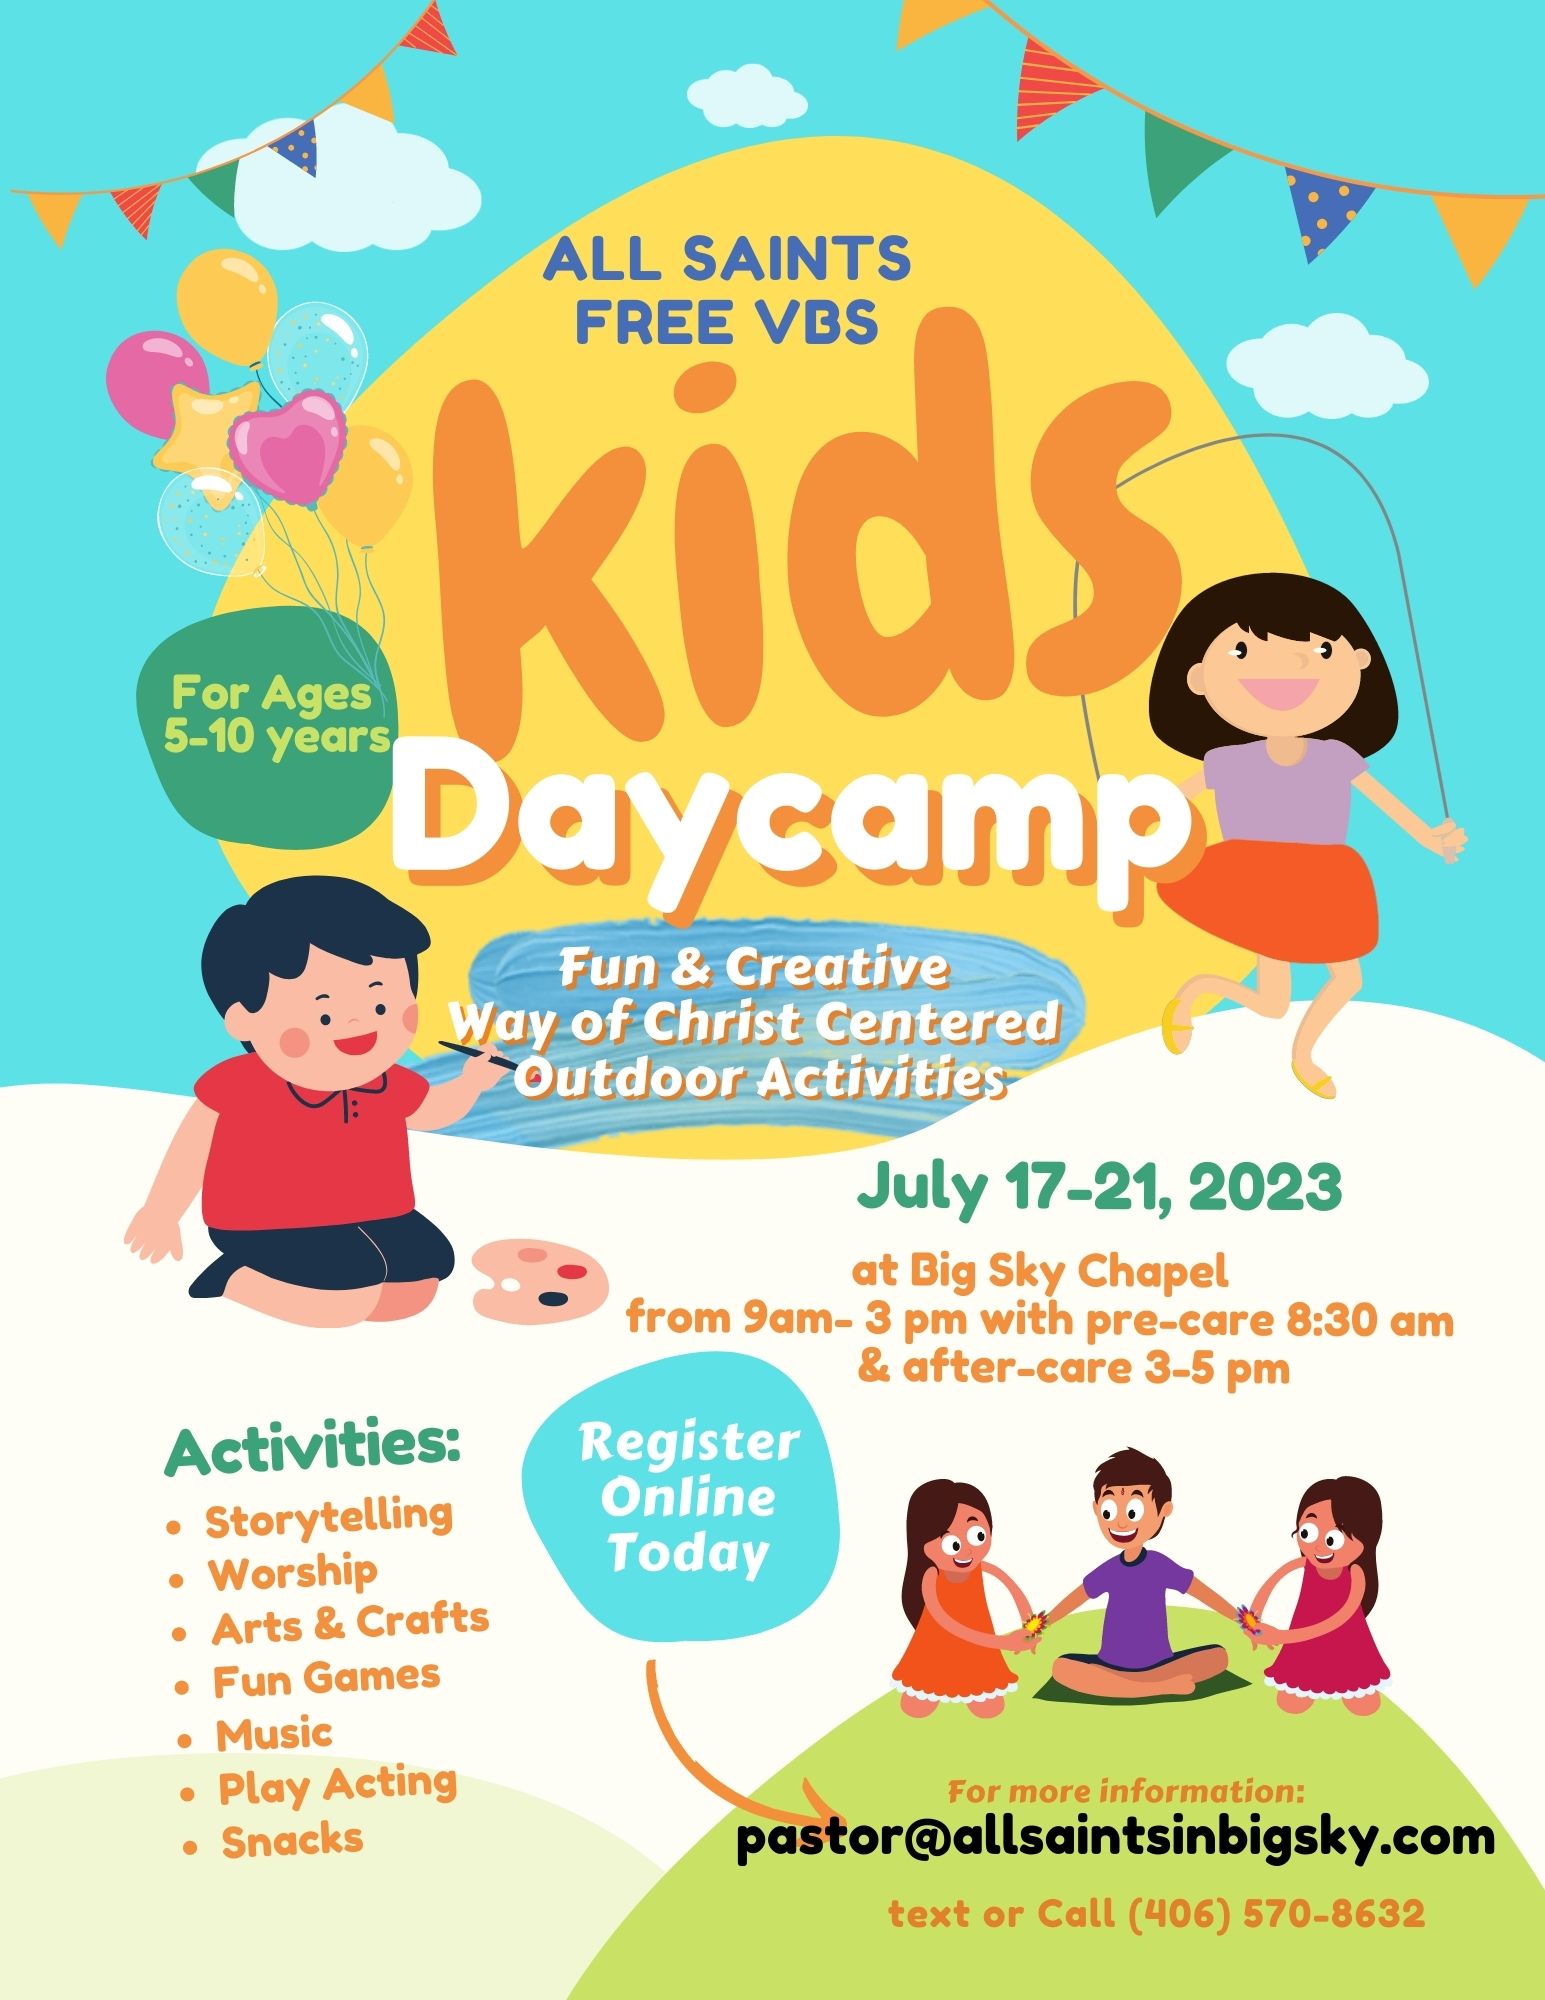 All Saints Kids Daycamp